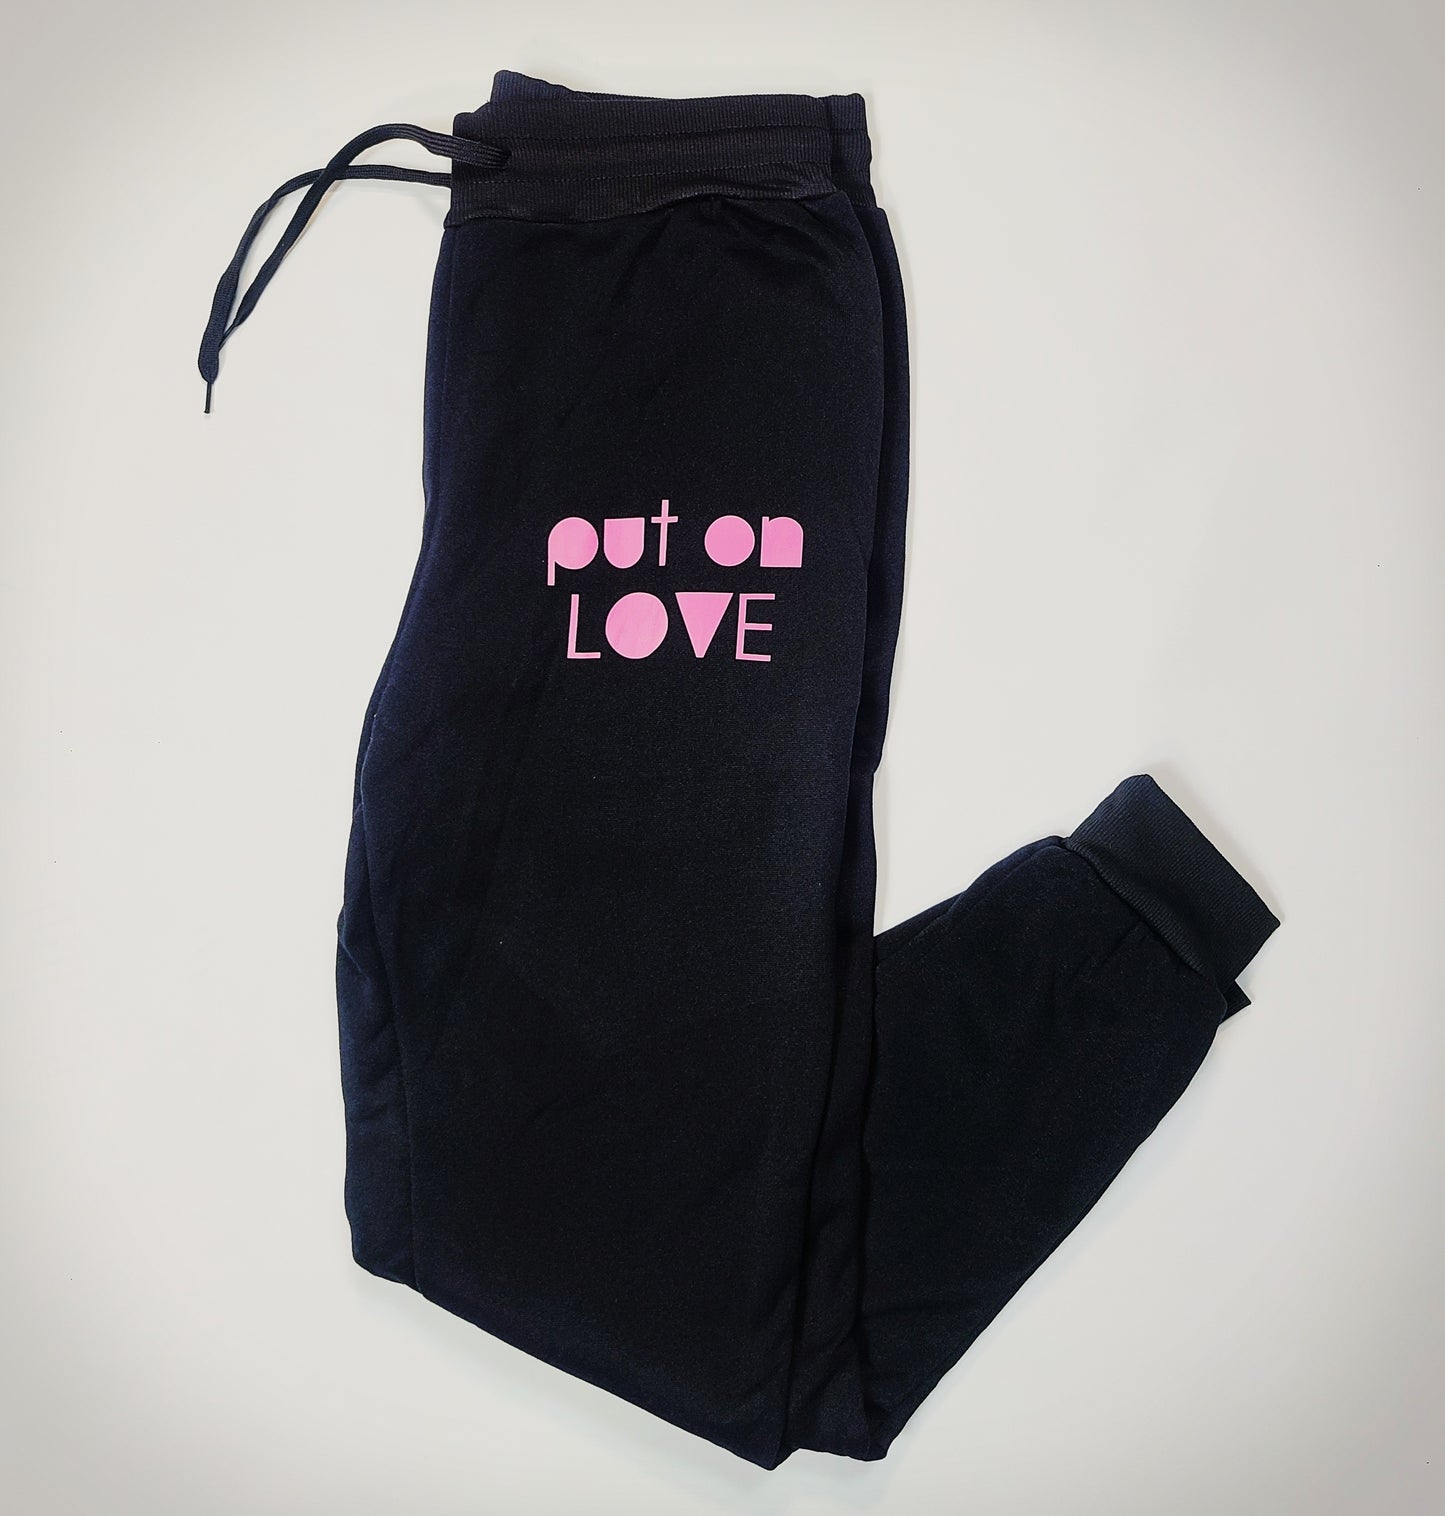 Put On Love (jogger pants)